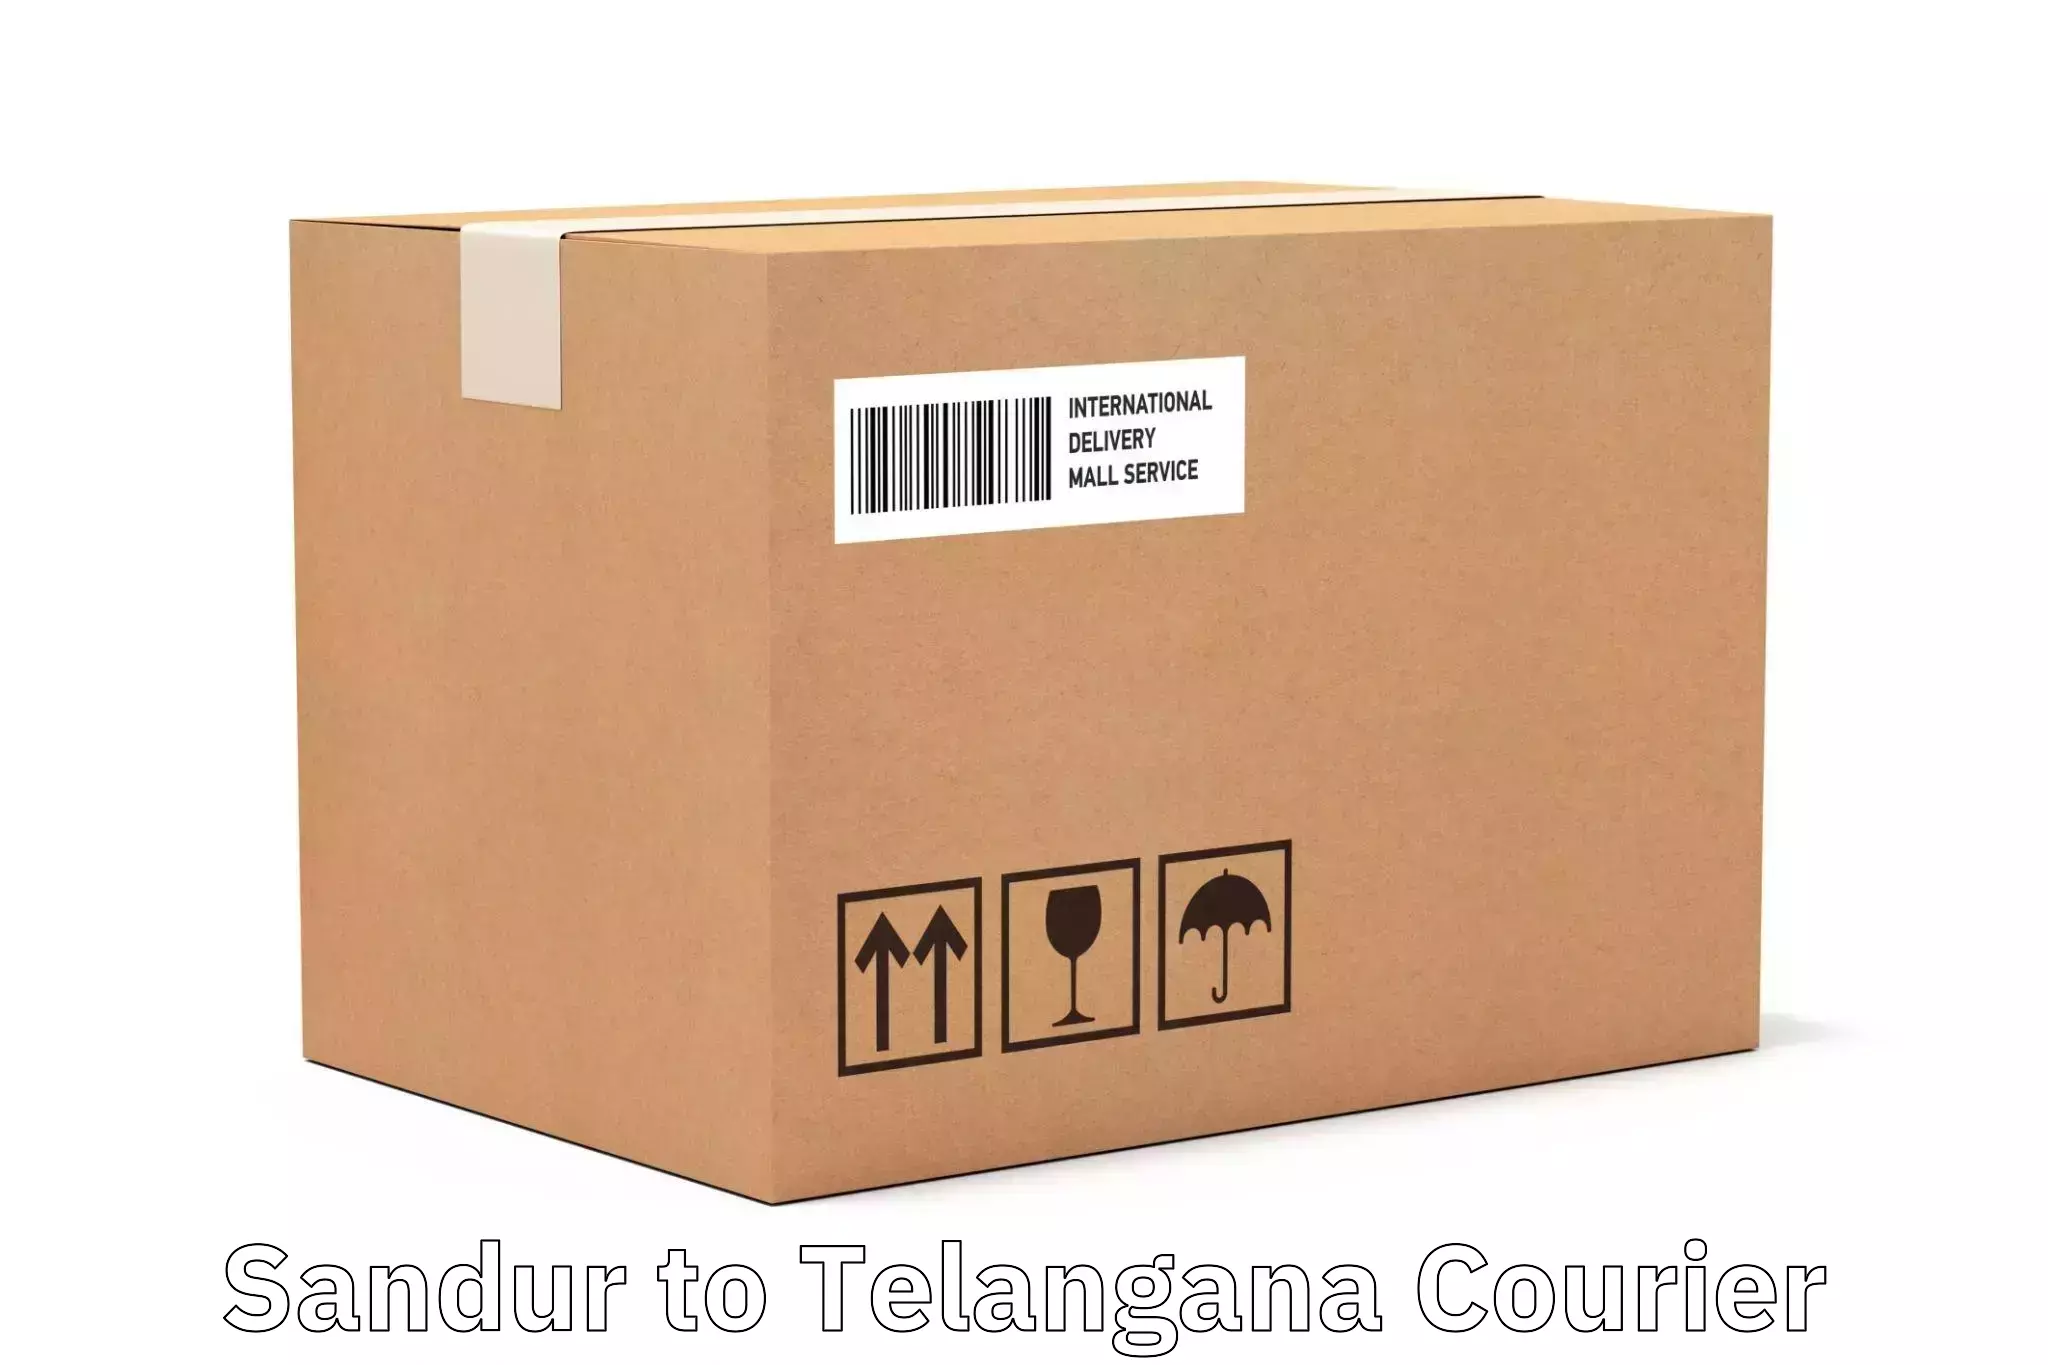 Local delivery service Sandur to Miryalaguda